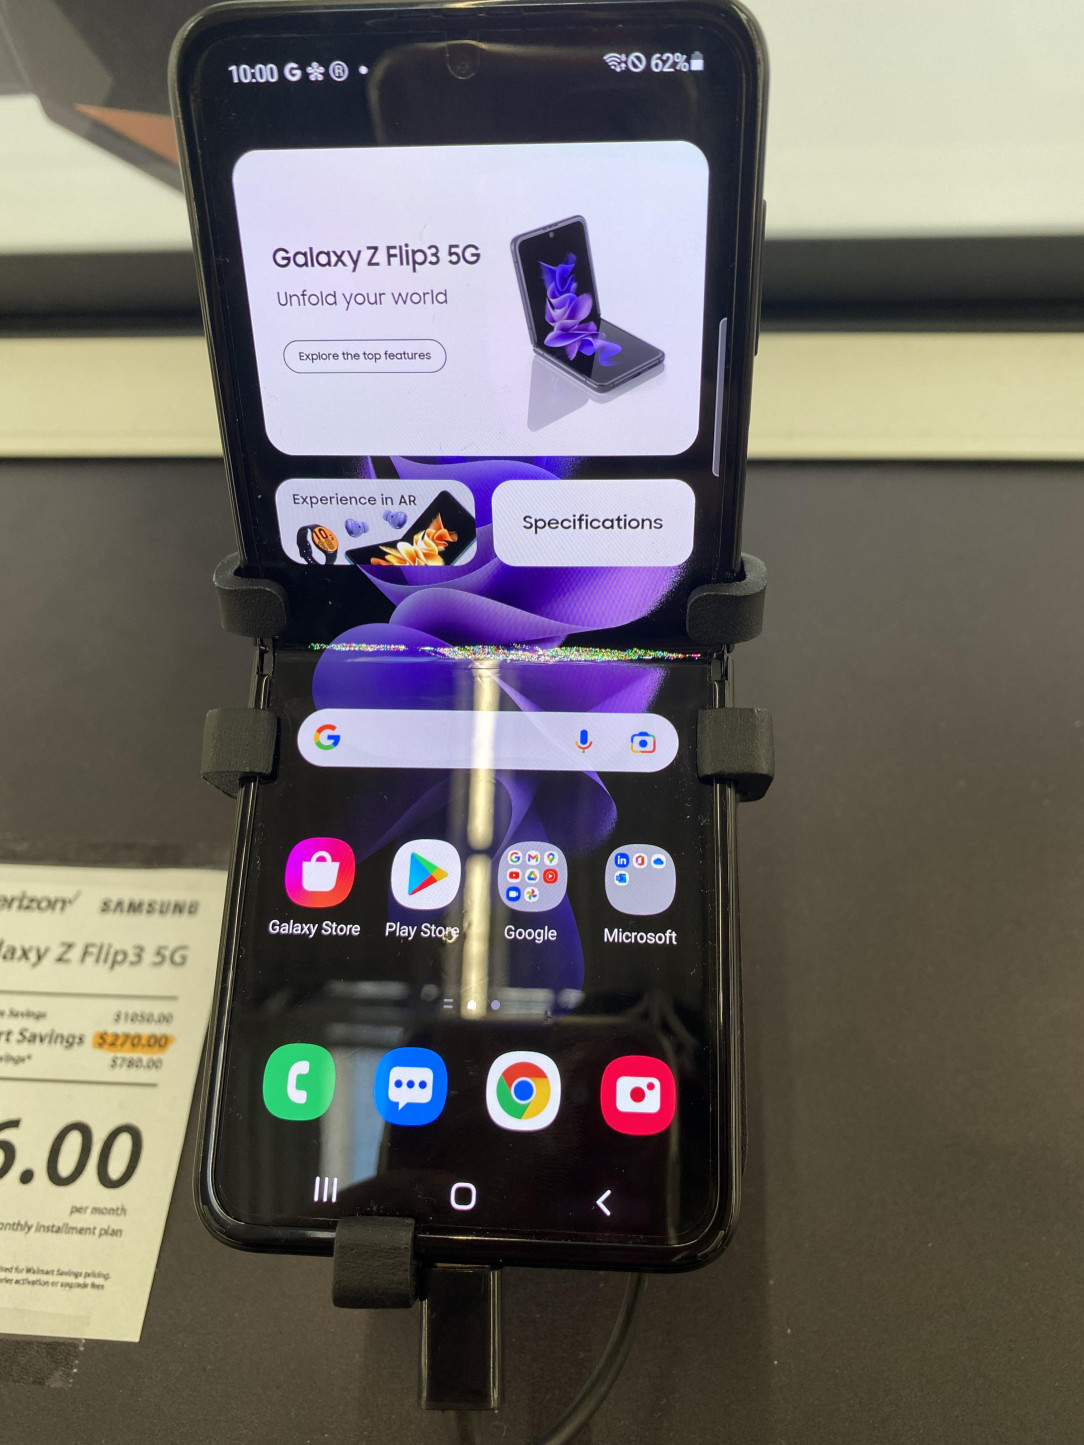 Dead pixels On the new Galaxy flip display model already